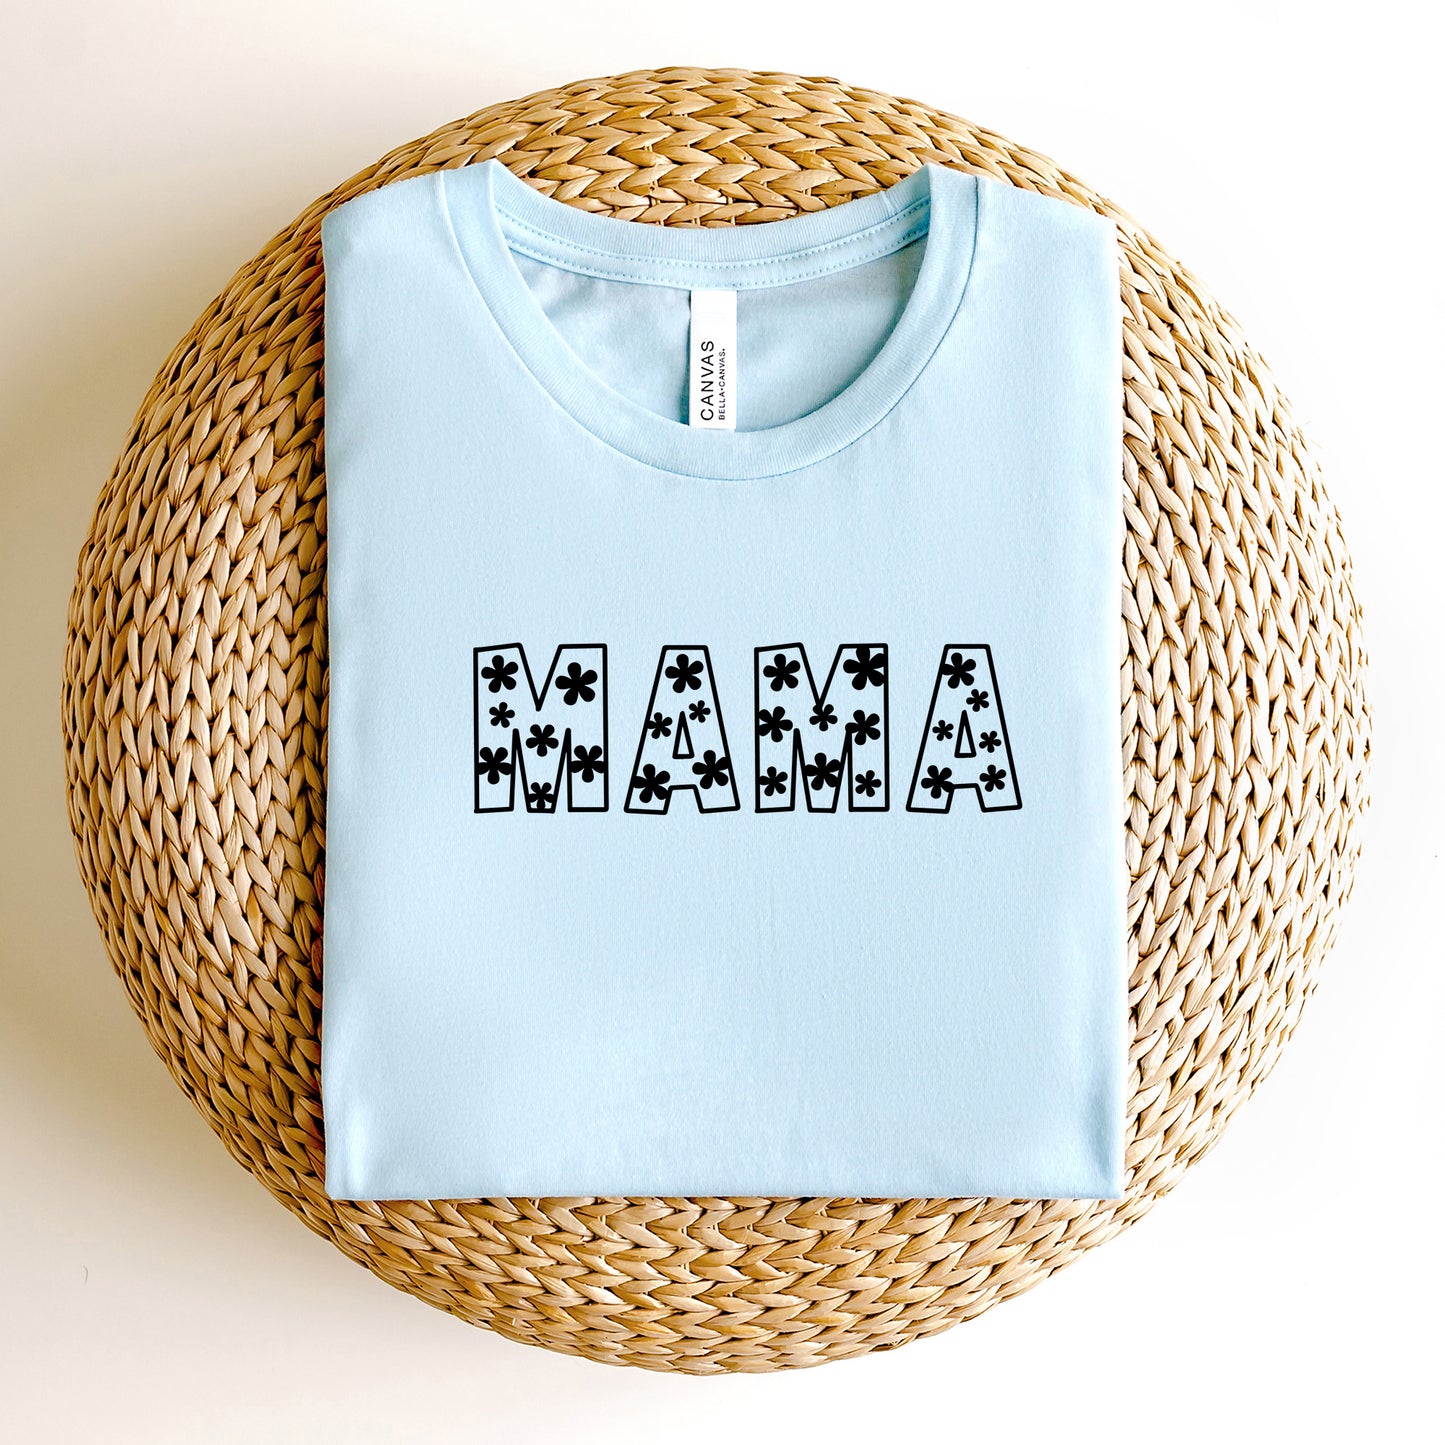 Flower Mama Bold | Short Sleeve Graphic Tee